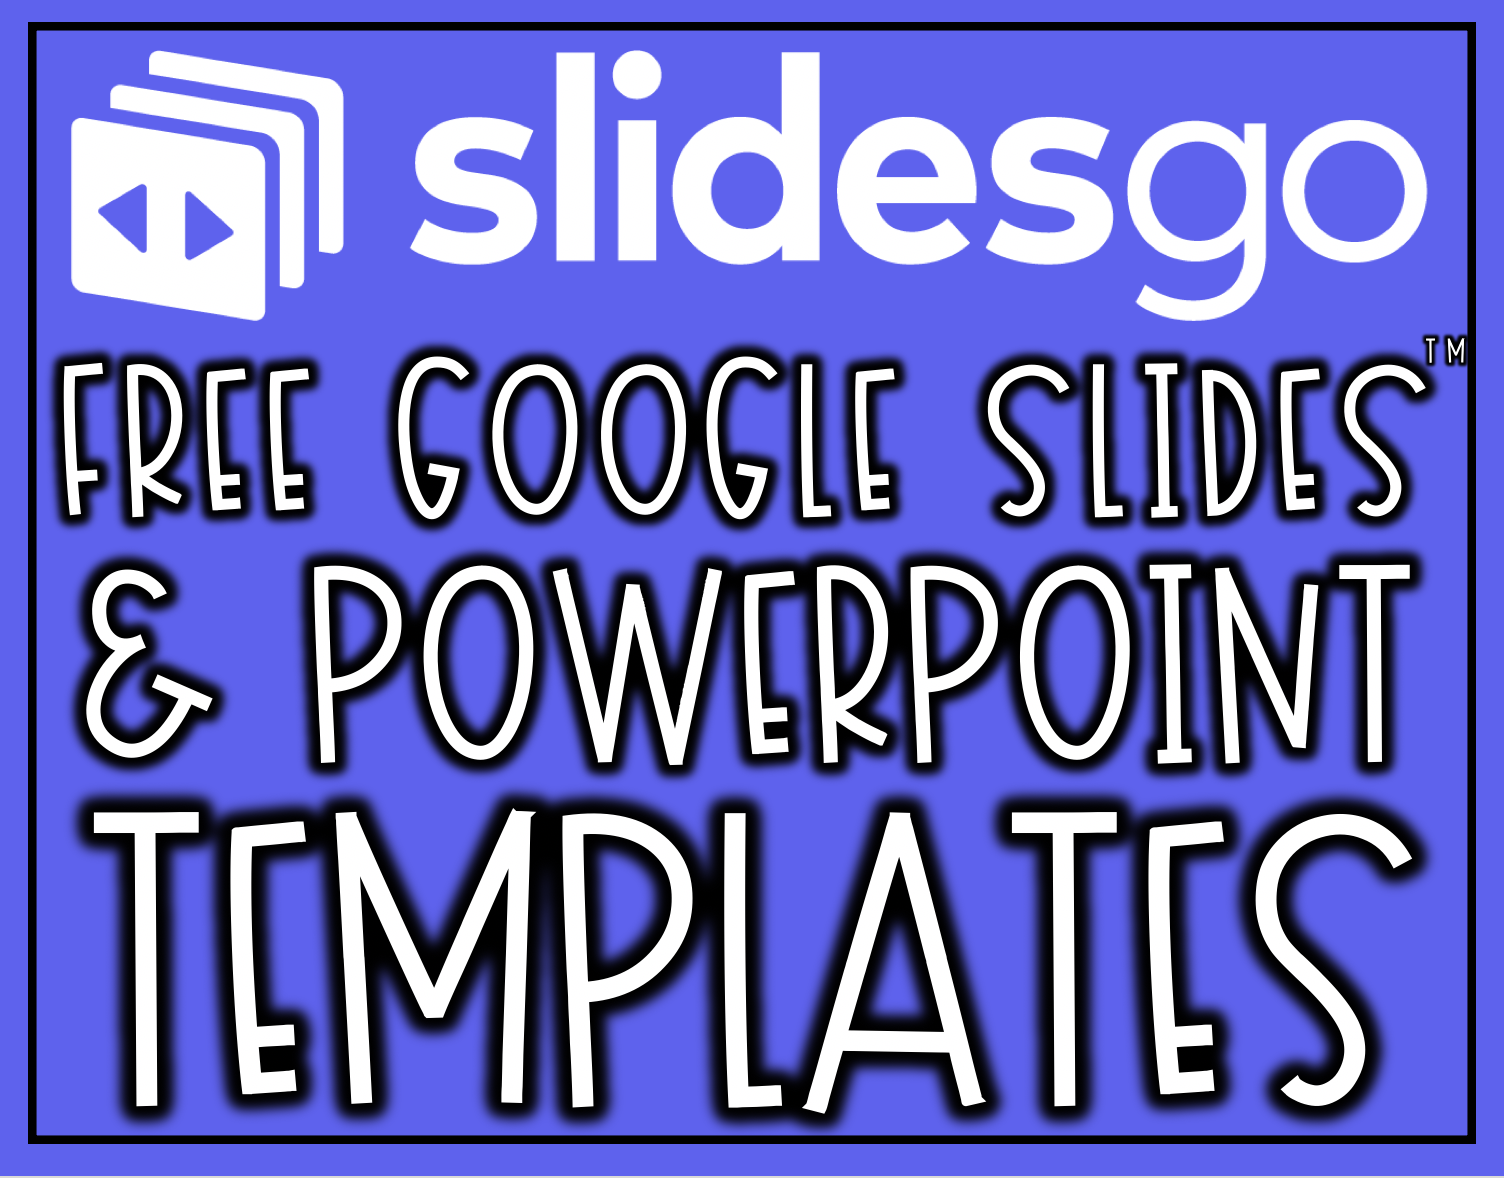 Slidesgo: Free Google Slides and PowerPoint Templates | The Techie Teacher®